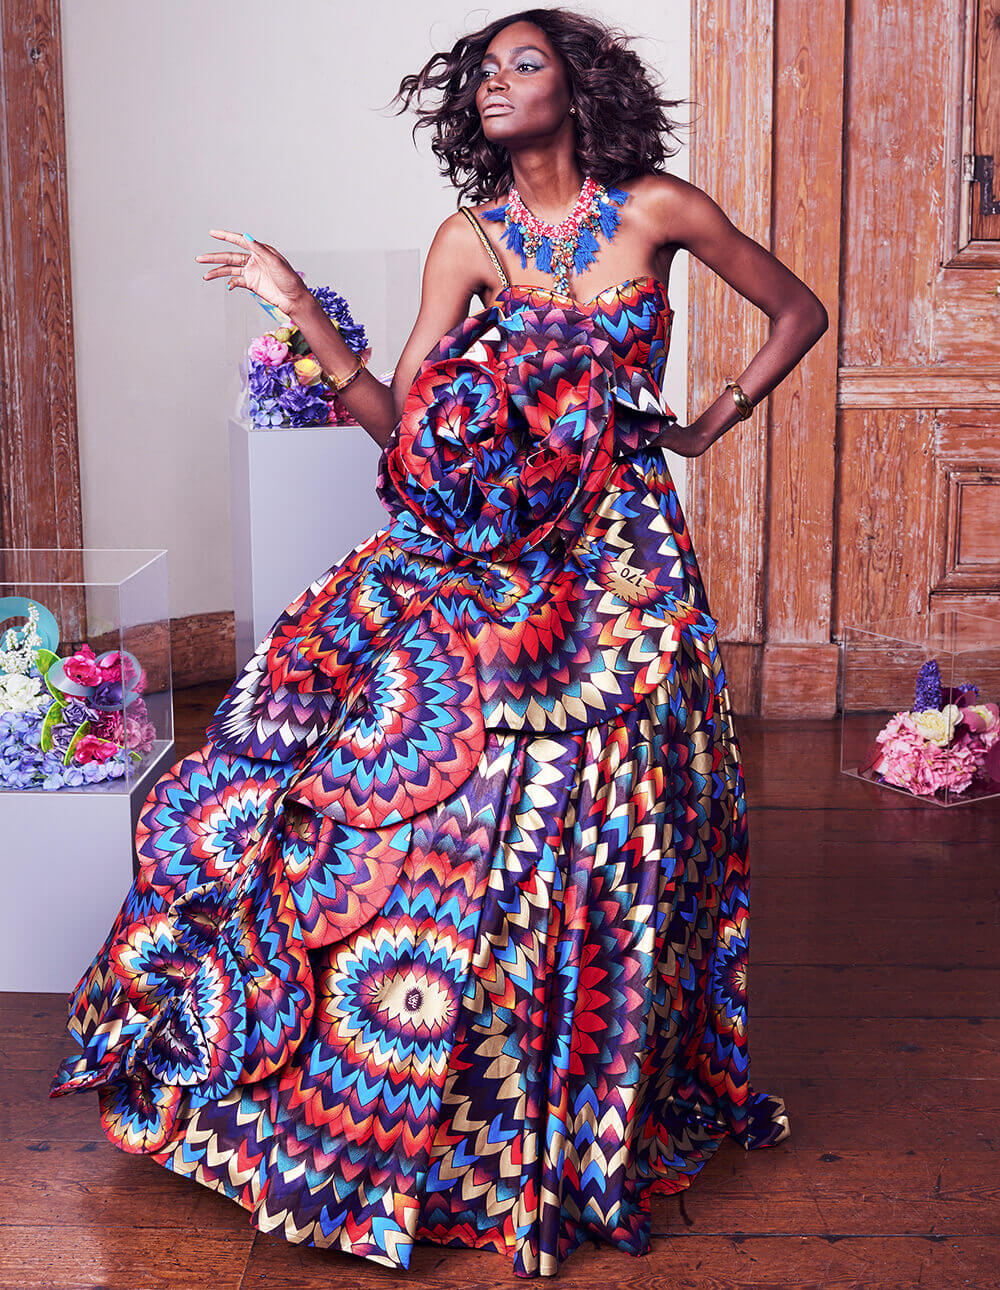 Splendid celebration - African Fashion lookbook | African styles